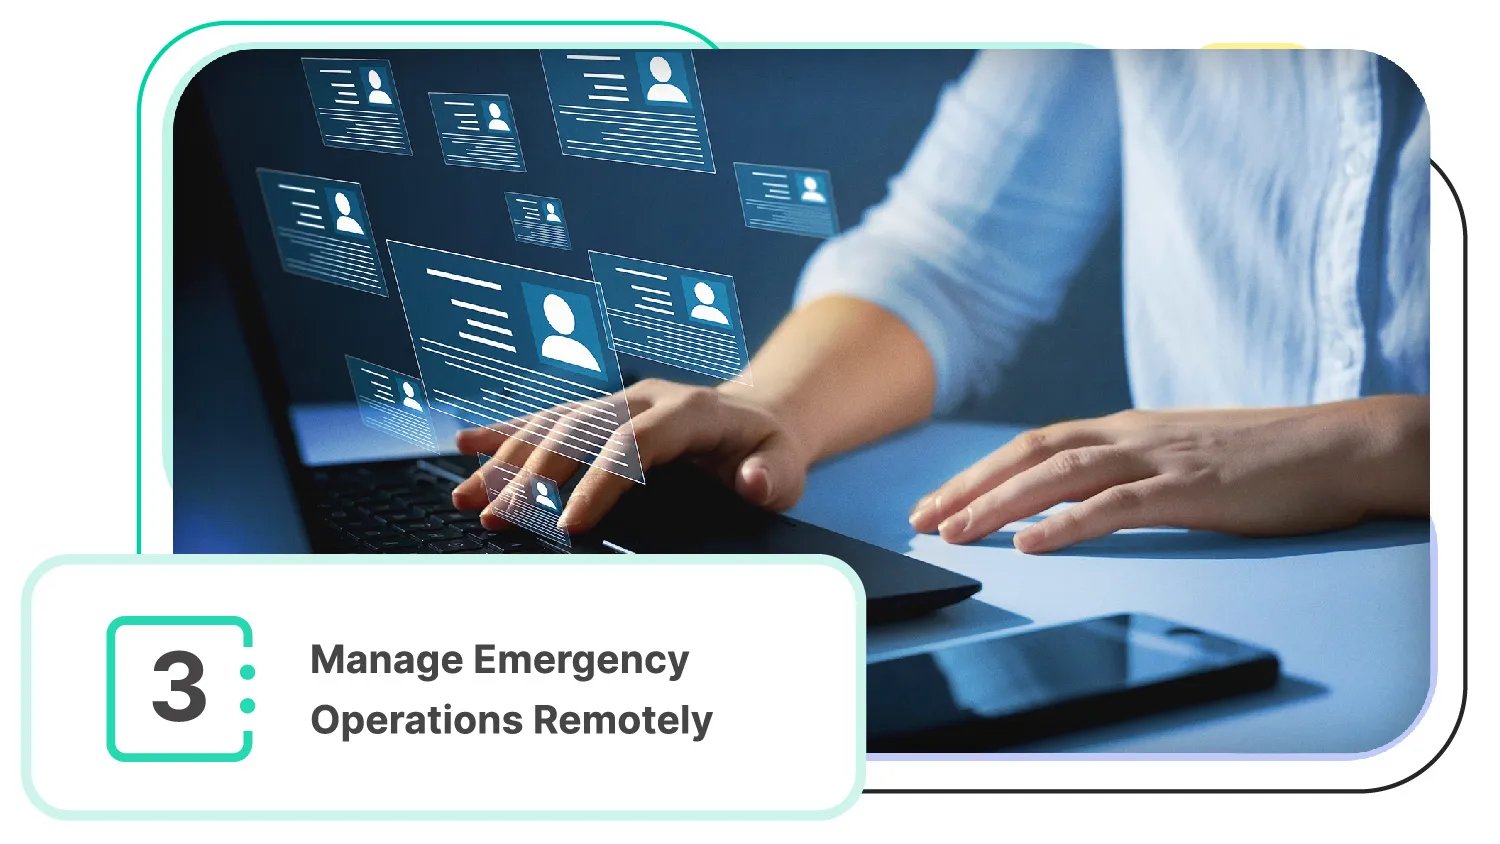 Remote emergency management